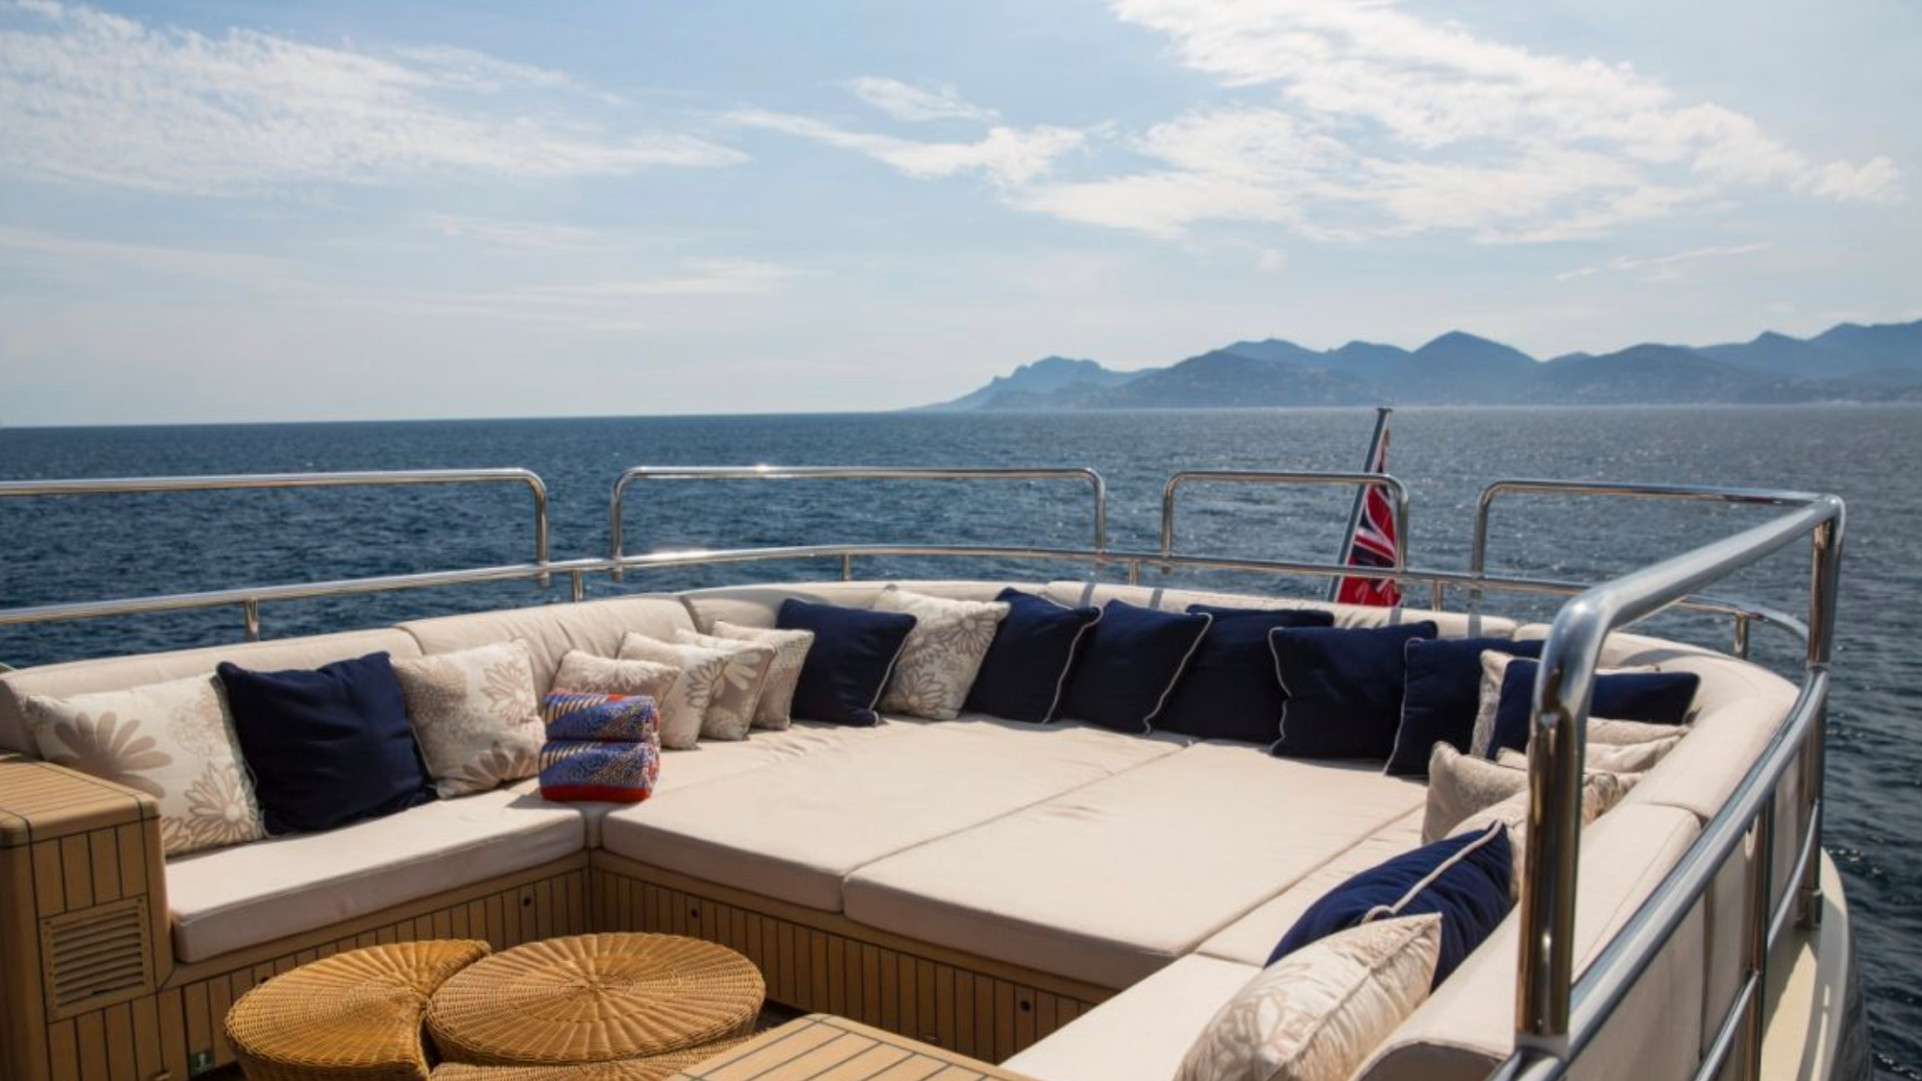 YCM 120 - Yacht Charter Menorca & Boat hire in Riviera, Corsica, Sardinia, Spain, Balearics, Caribbean 5